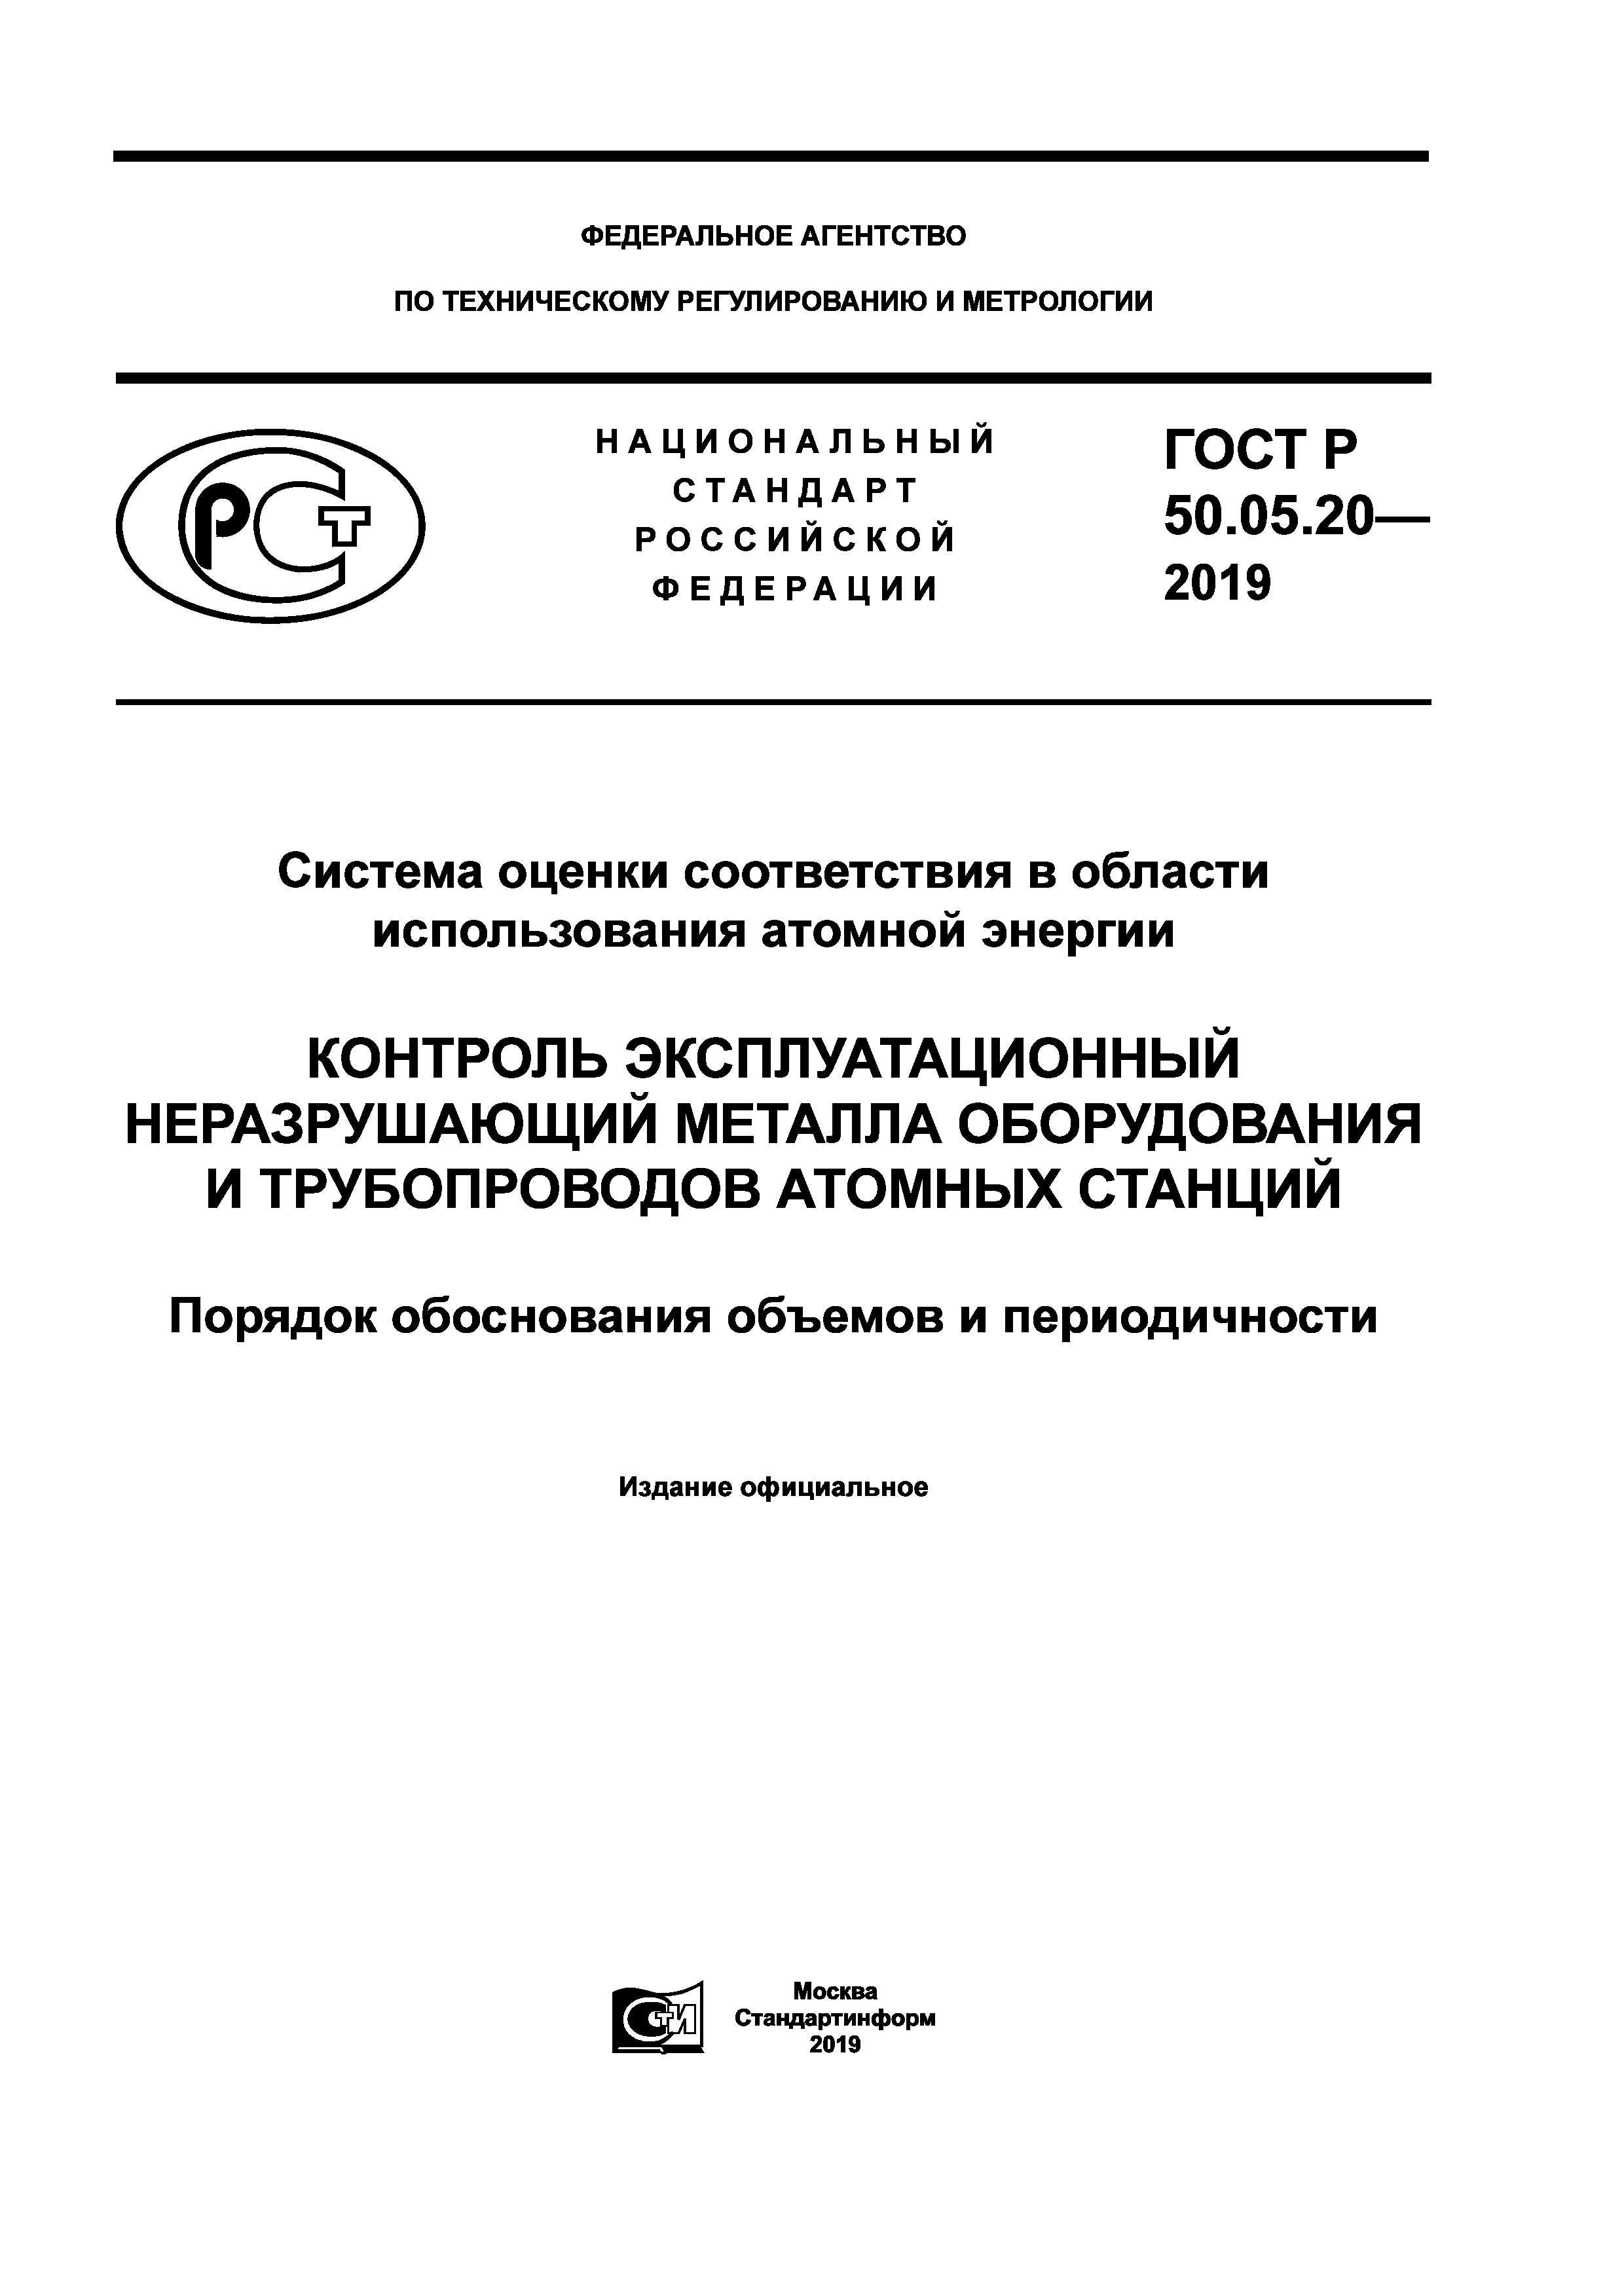 ГОСТ Р 50.05.20-2019